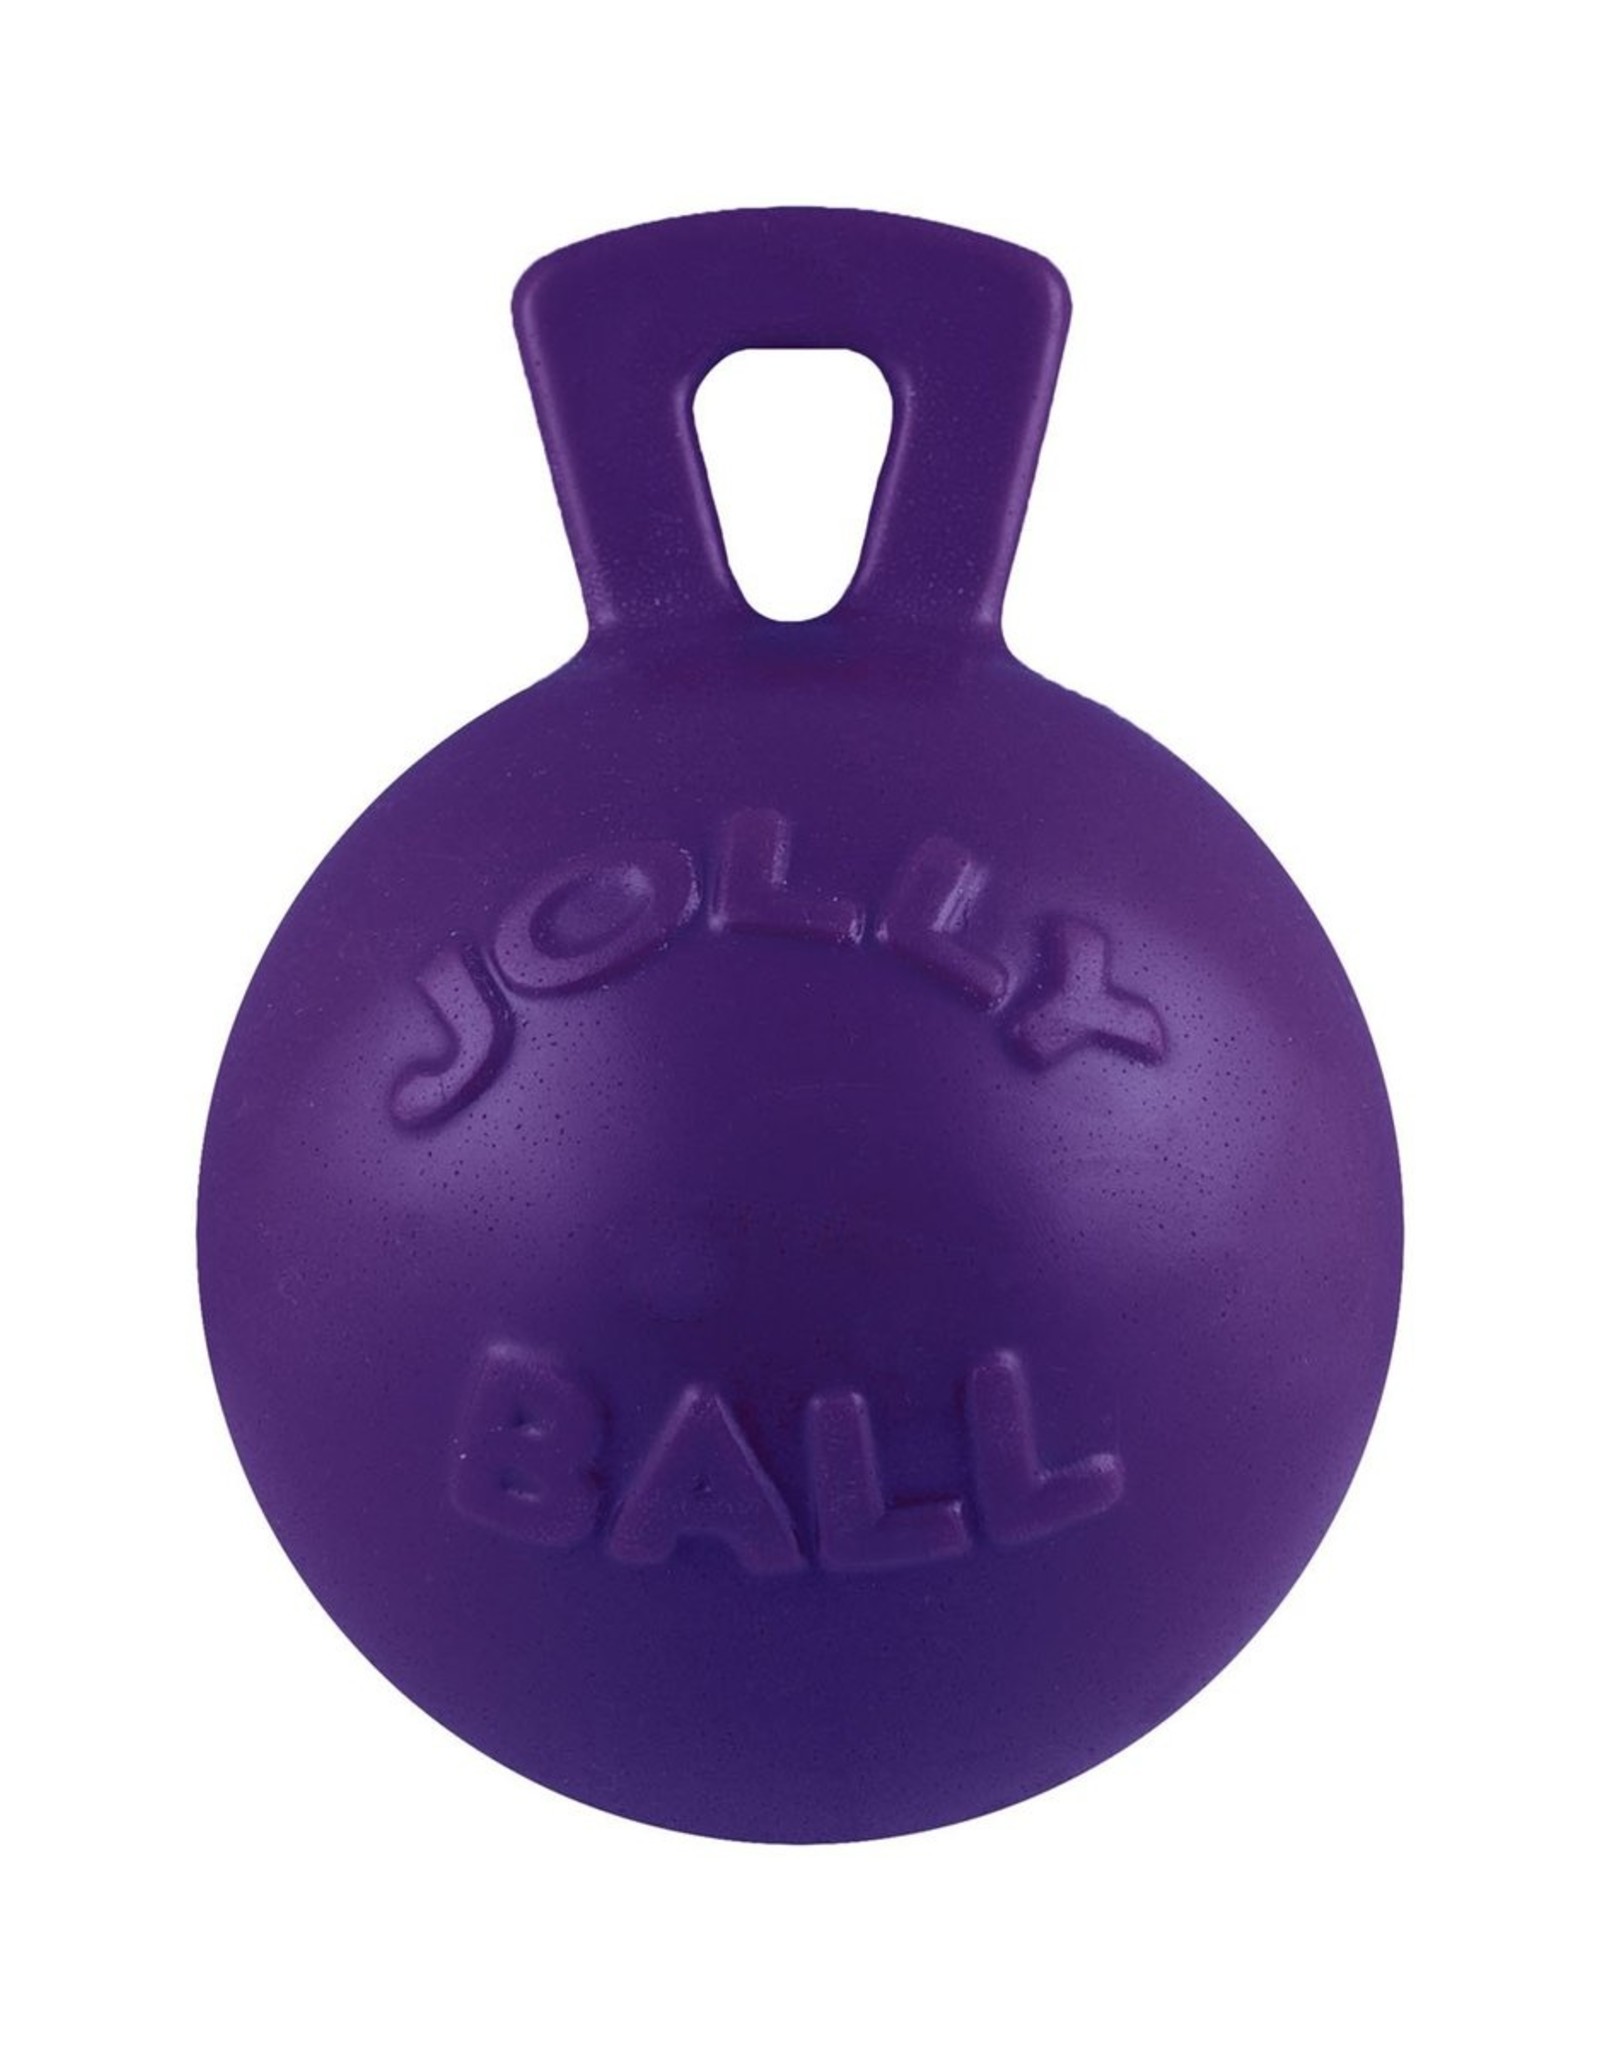 JOLLY PETS JOLLY BALL TUG-N-TOSS  10" PURPLE LARGE